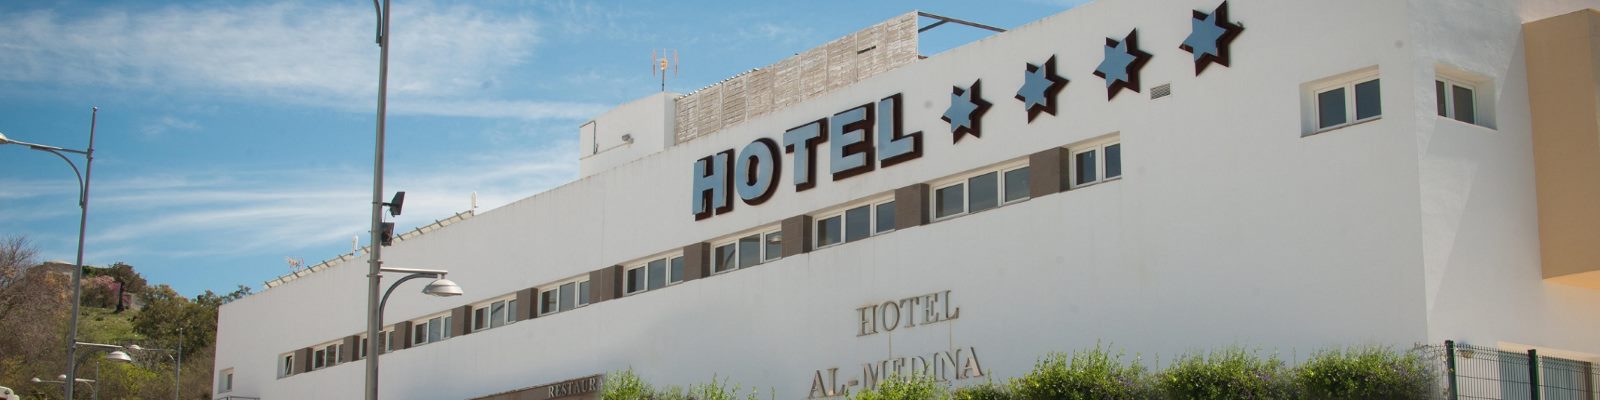 Escapada barata Hotel con spa (Medina Sidonia - CADIZ)